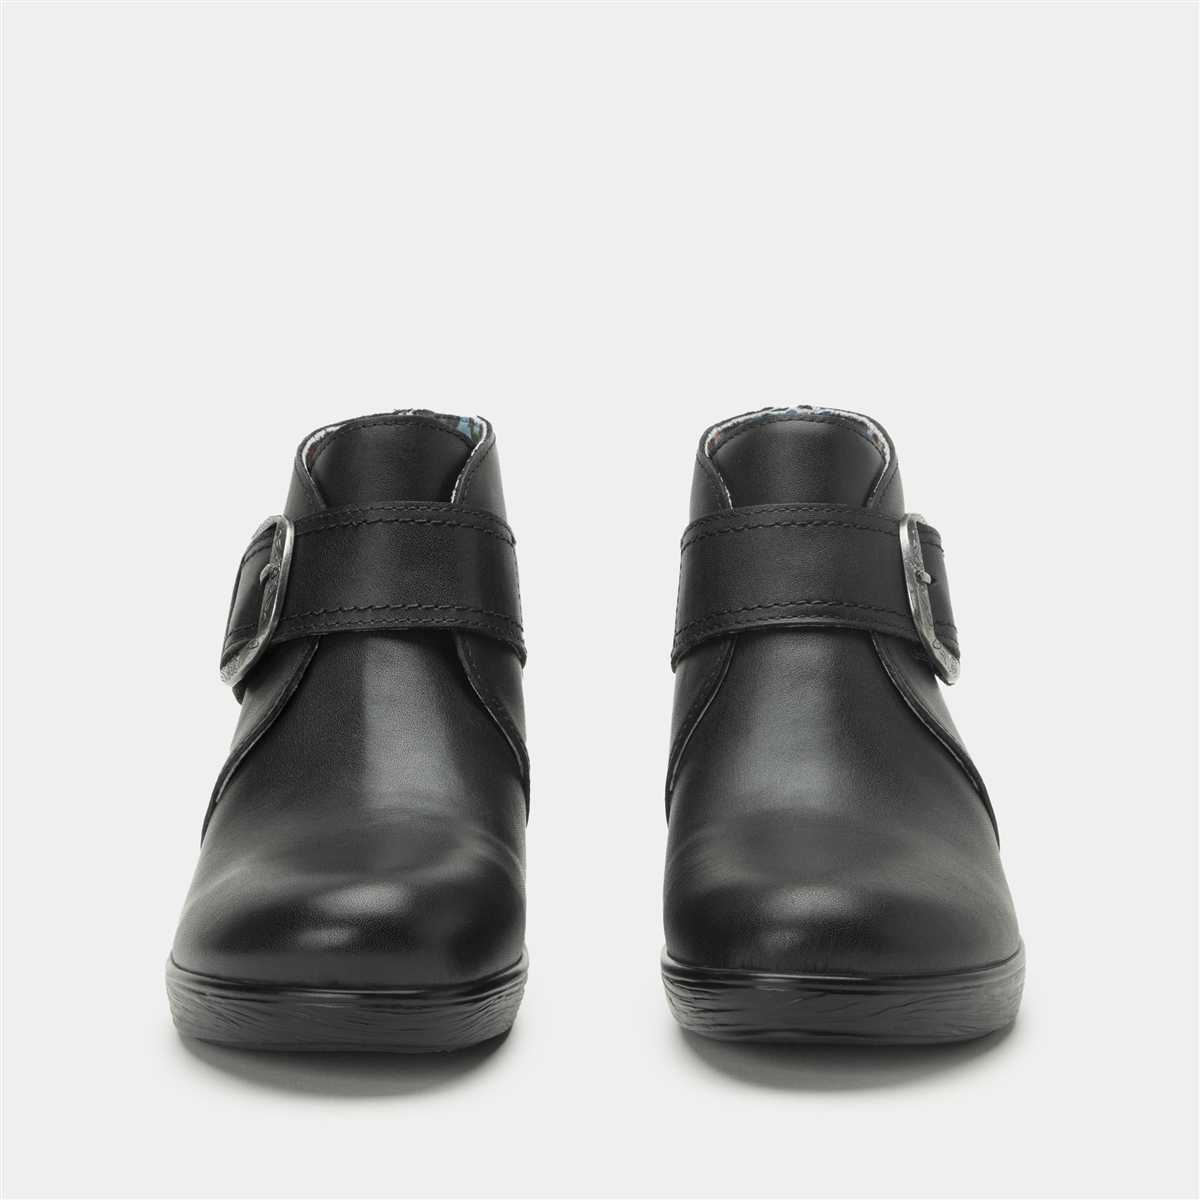 Alegria Shoes - Symone Coal